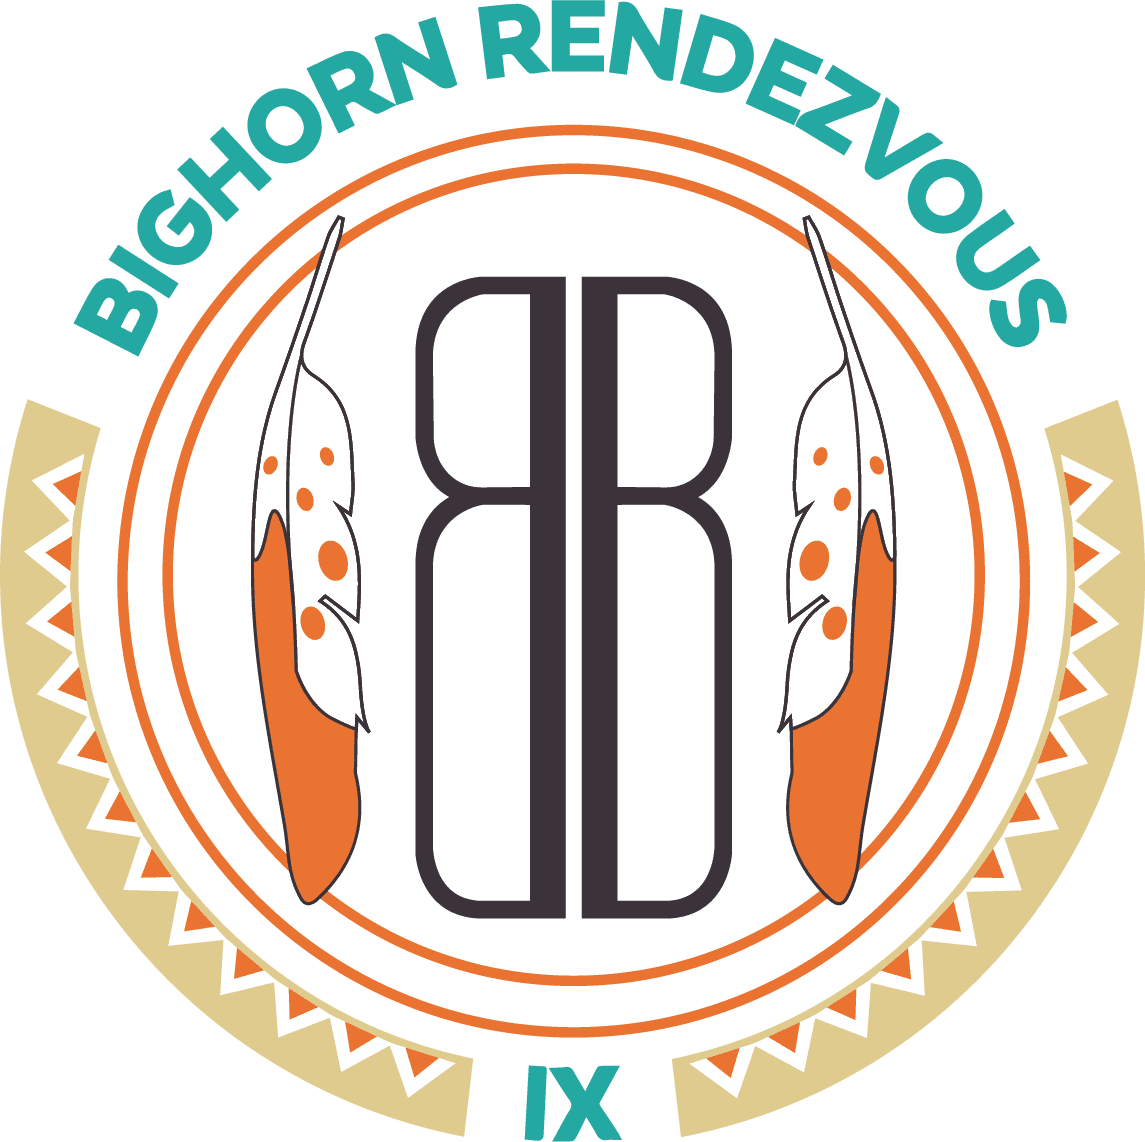 Bighorn Rendezvous logo